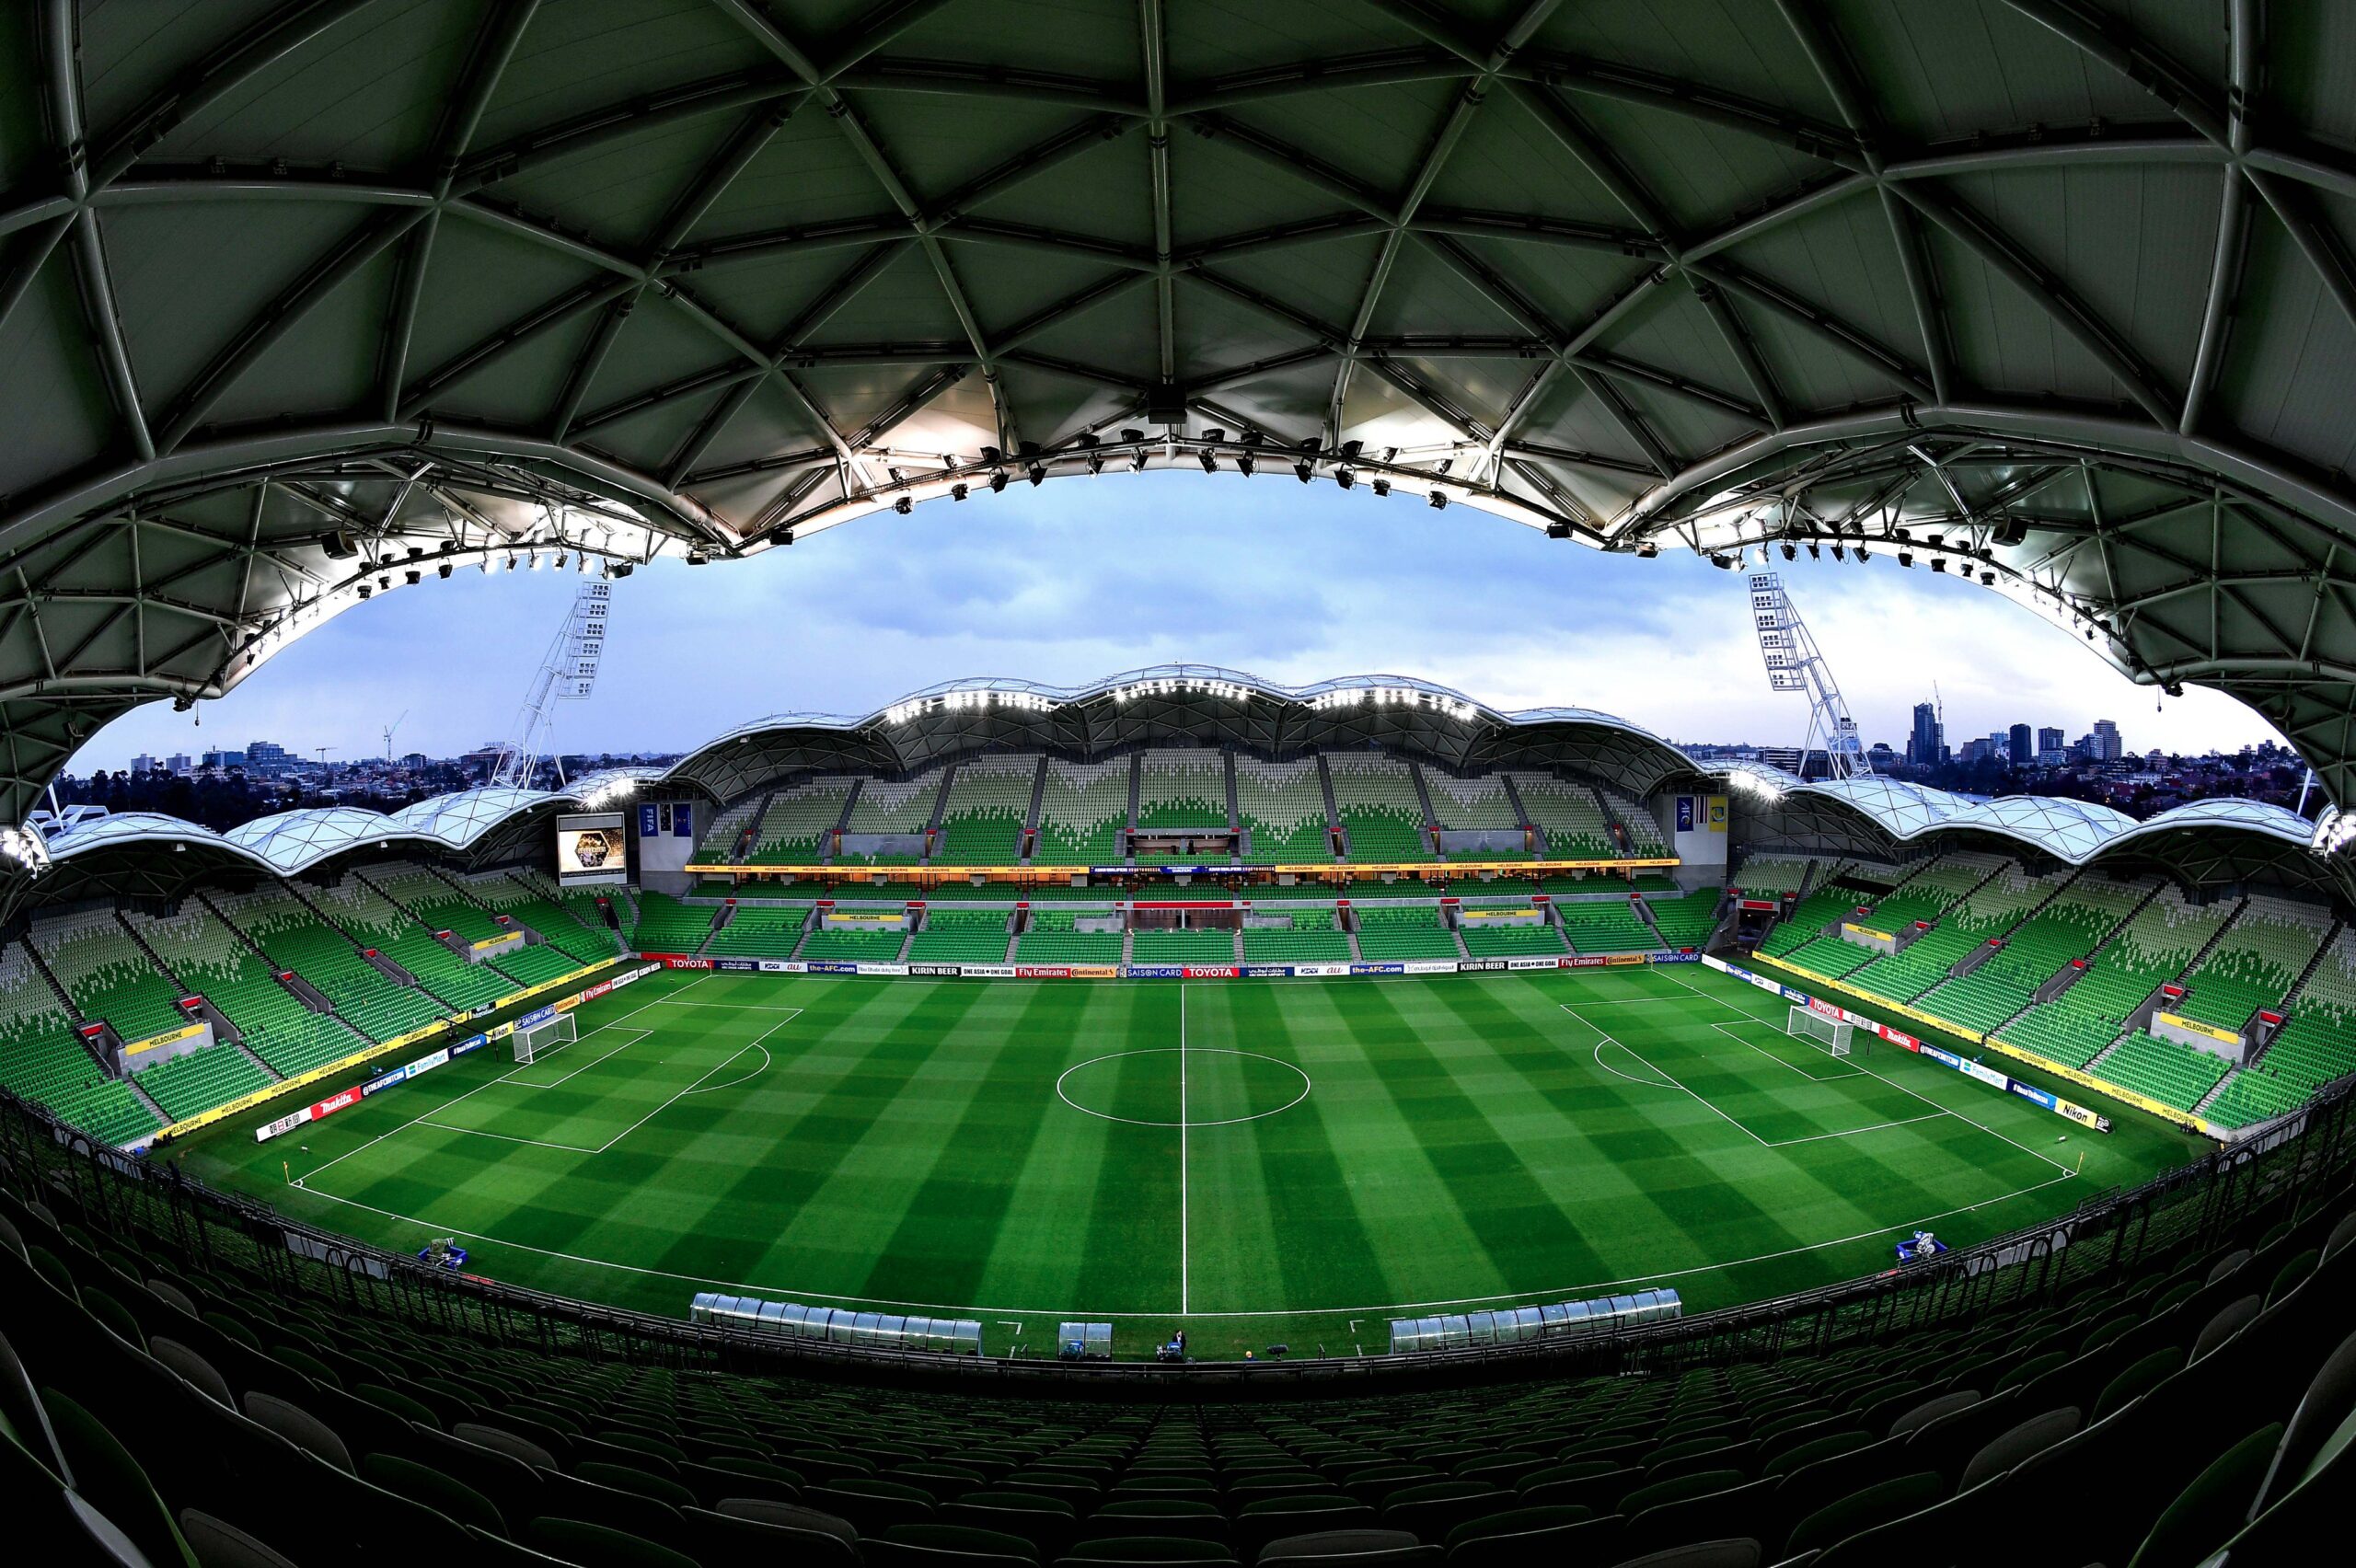 SOCCER: FIFA Women's World Cup 2023 stadia – Brisbane Stadium